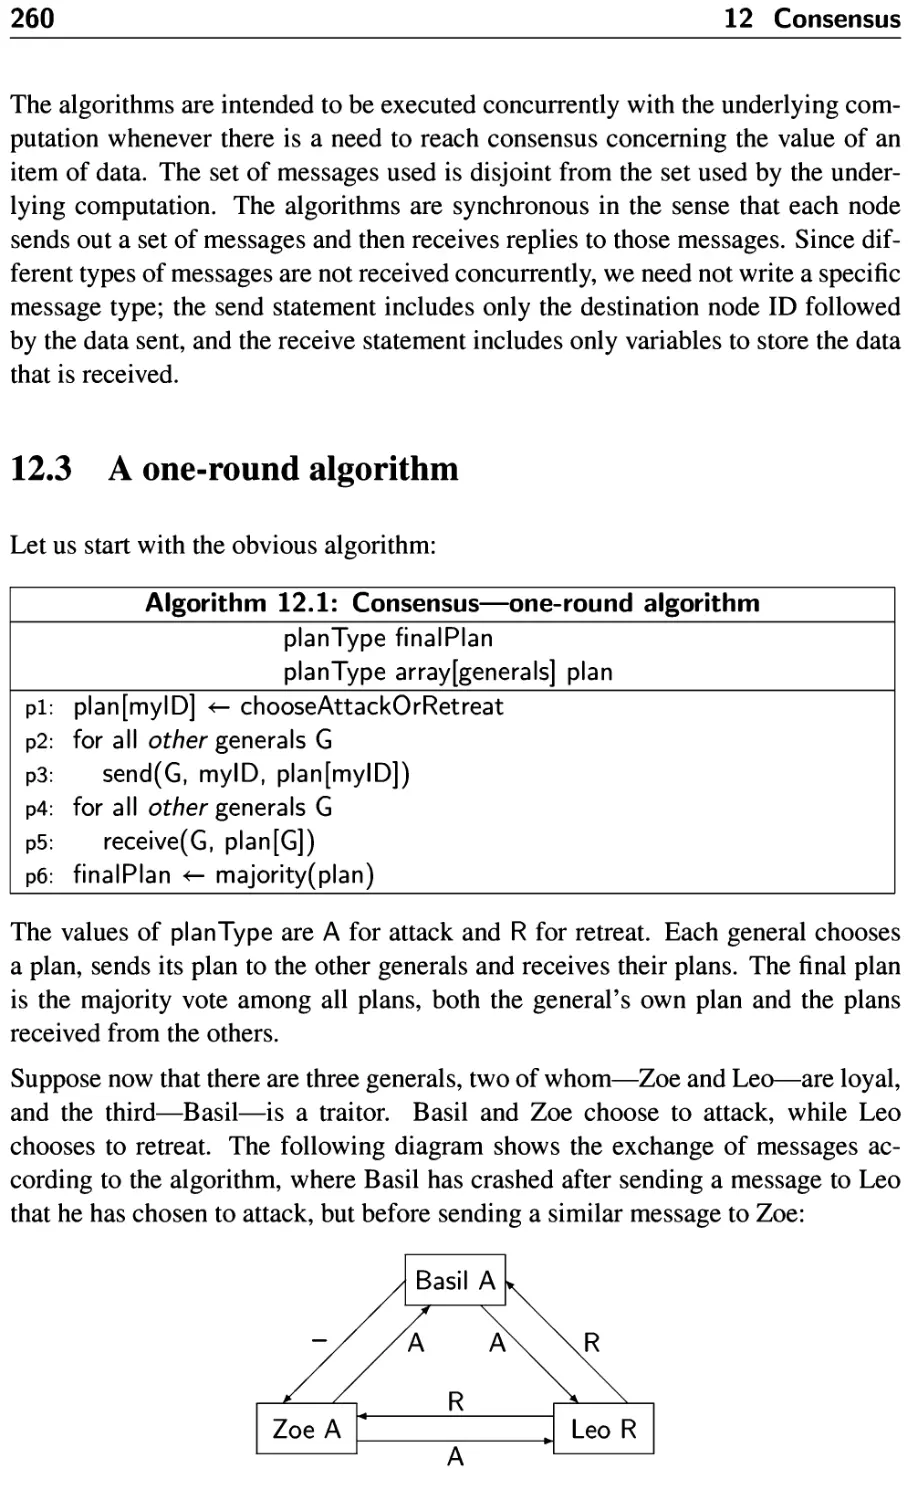 12.3 A one-round algorithm